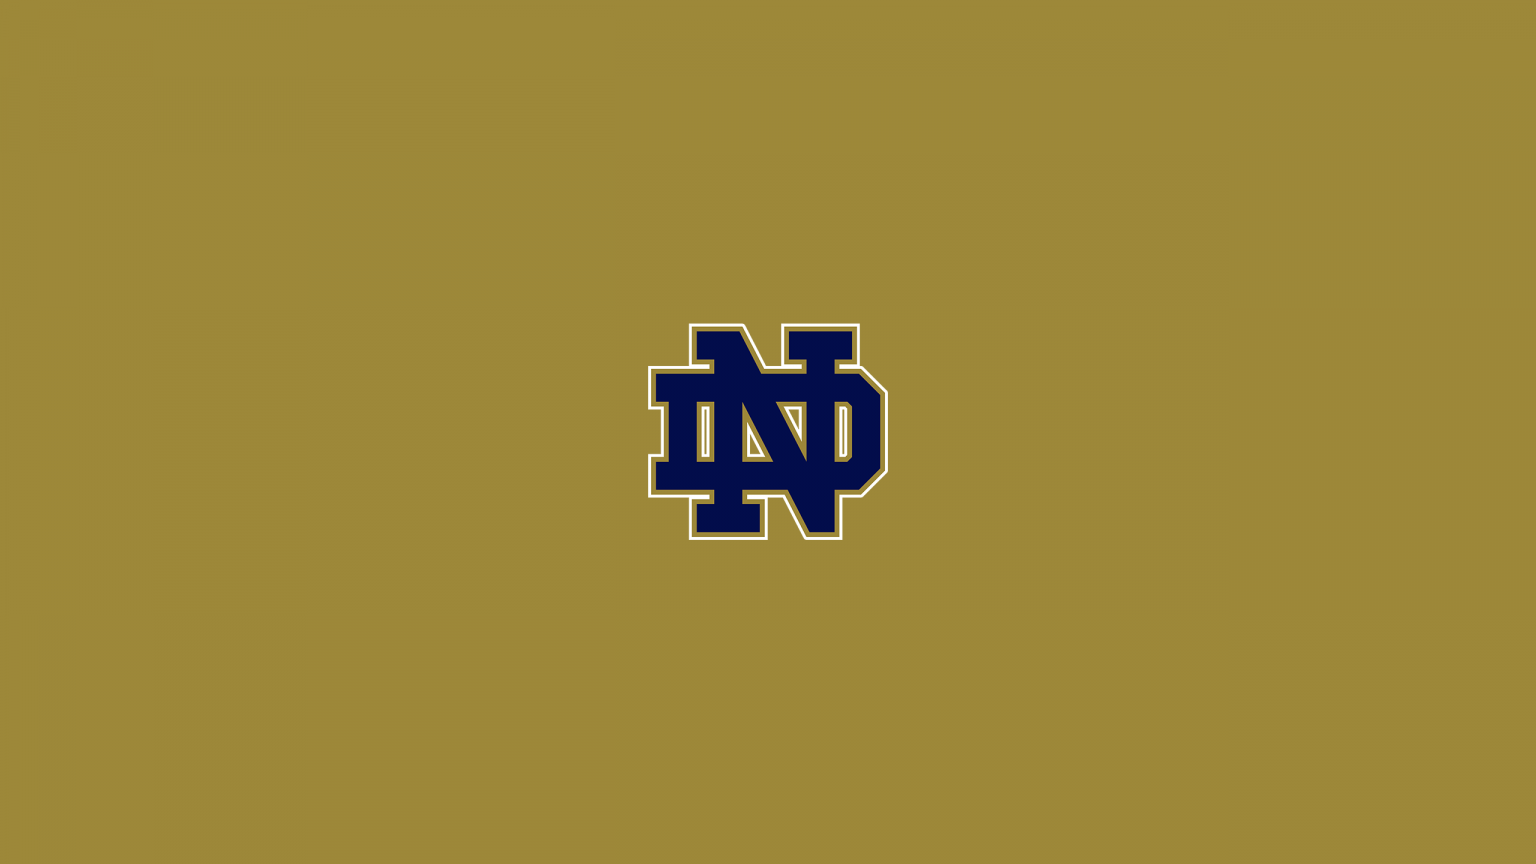 Notre Dame Fighting Irish - NCAAF - Square Bettor